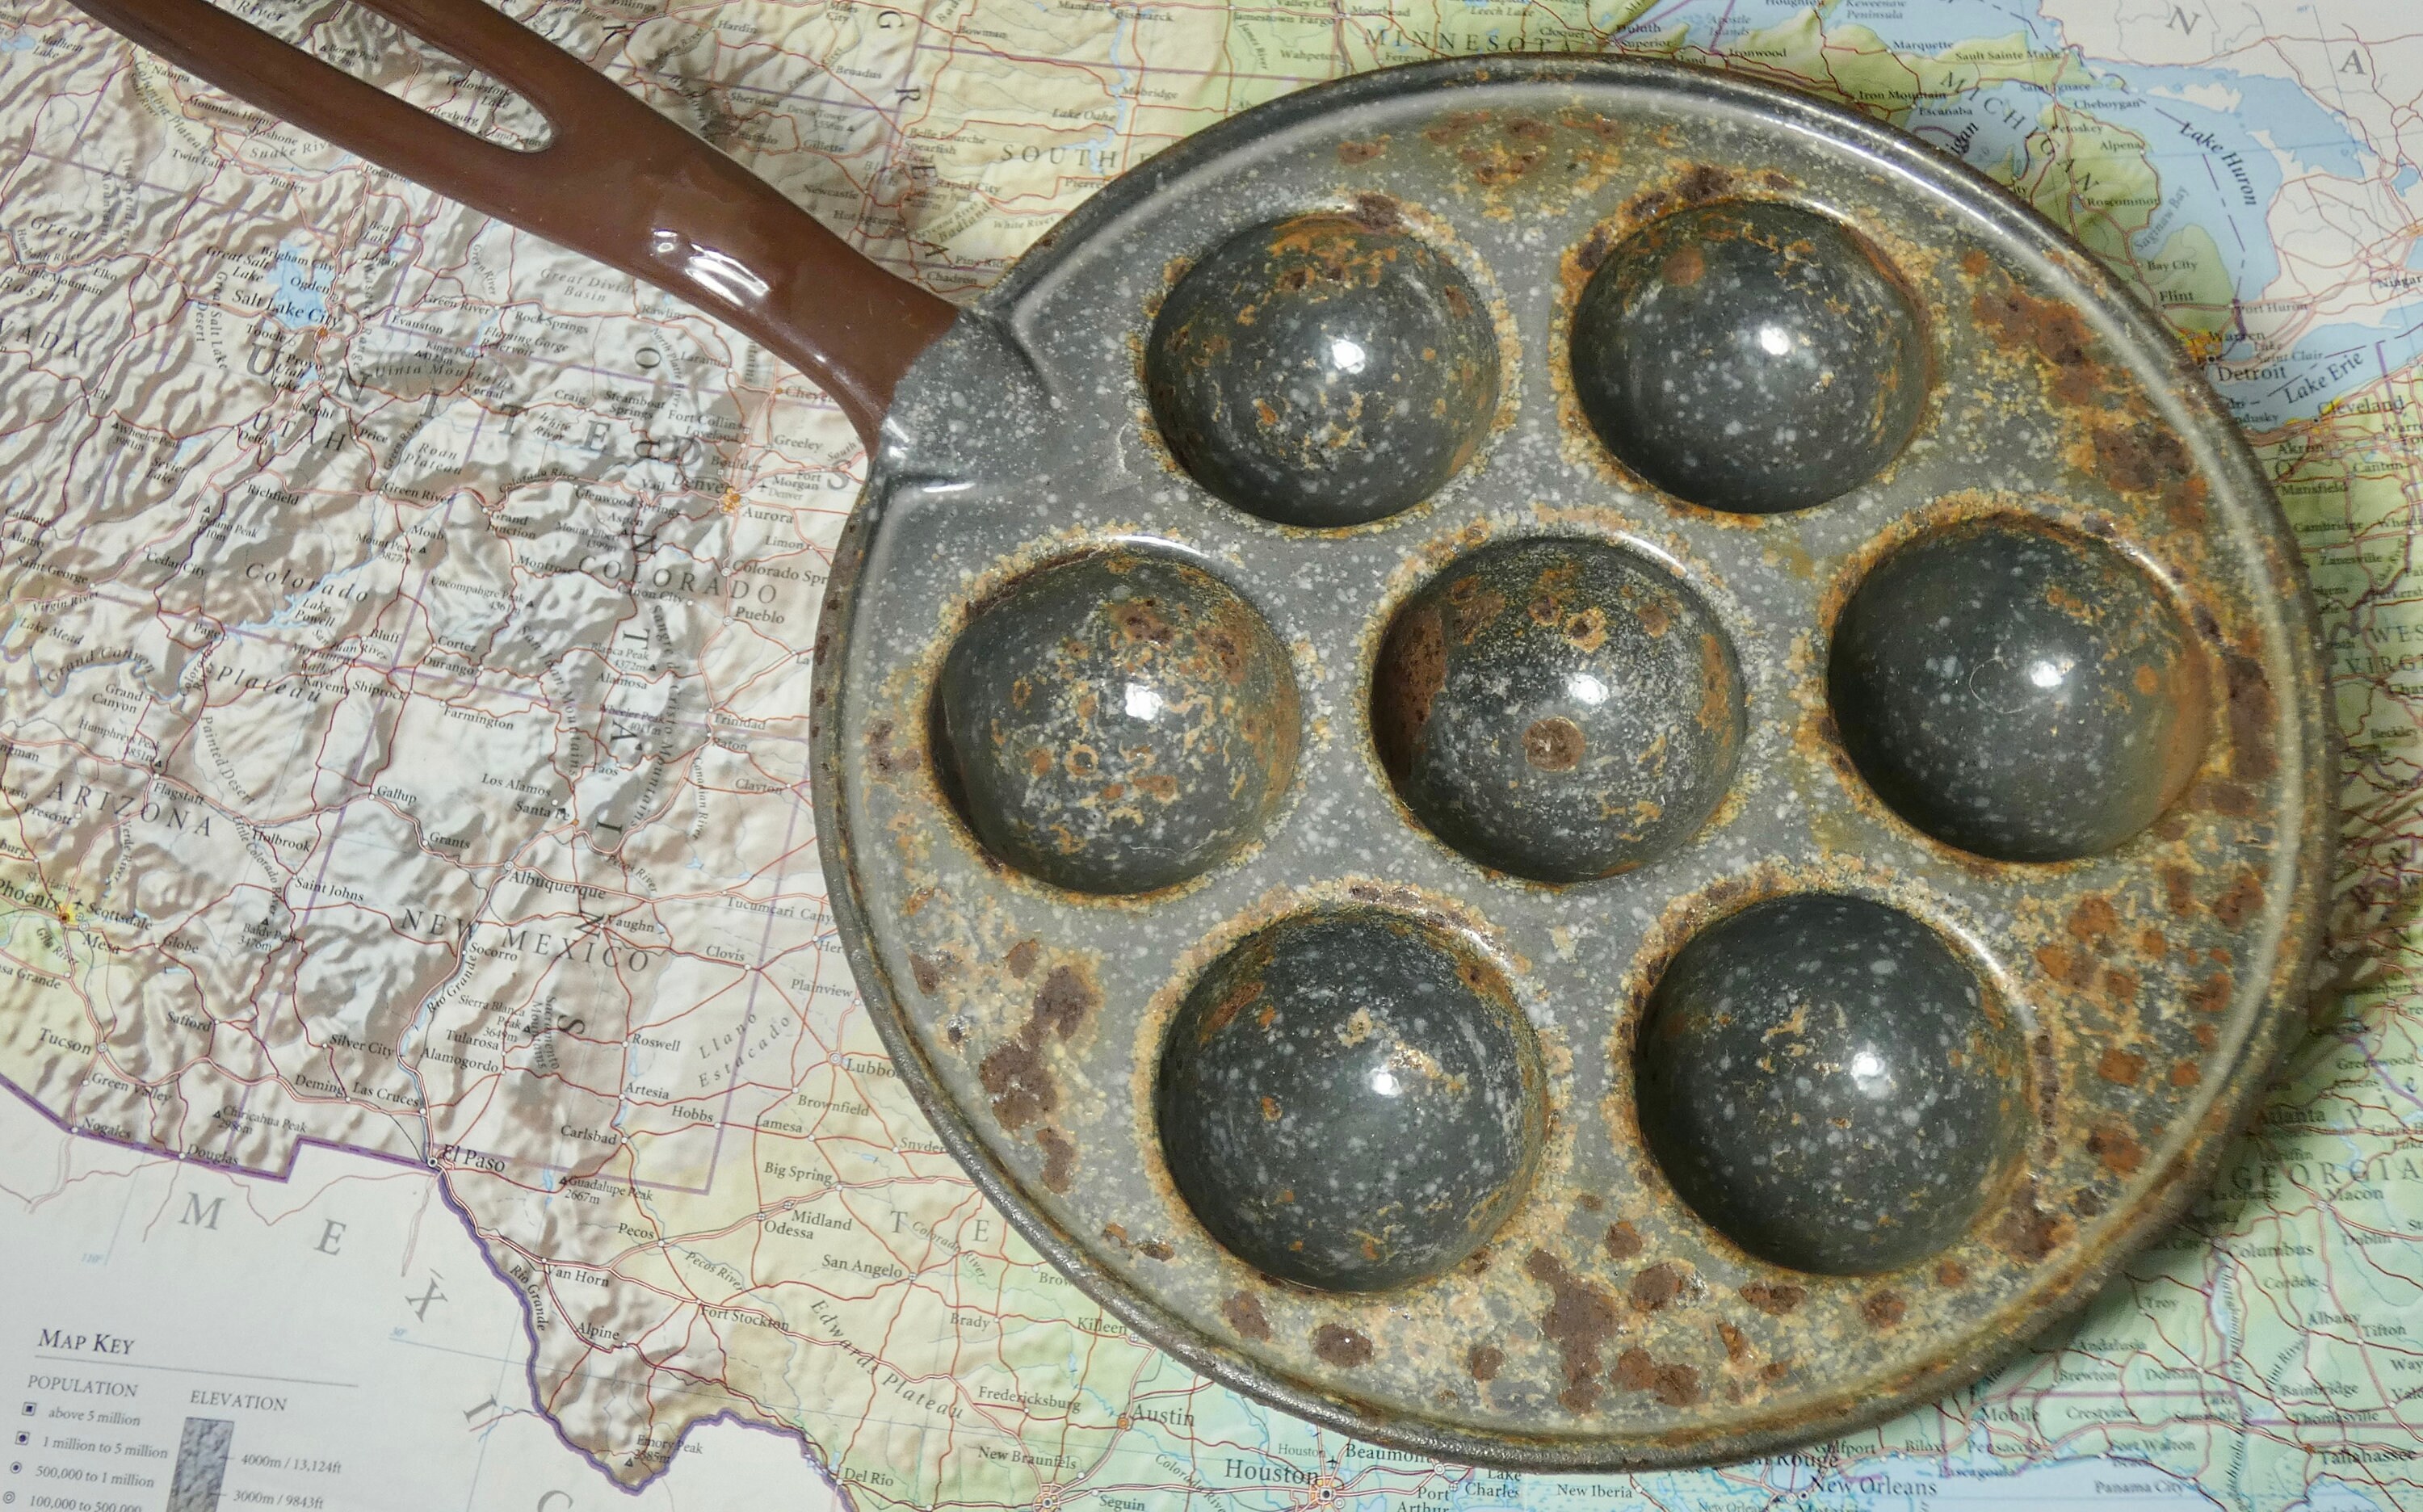 Cast Iron Aebleskiver Pan for Danish Stuffed Pancake Balls